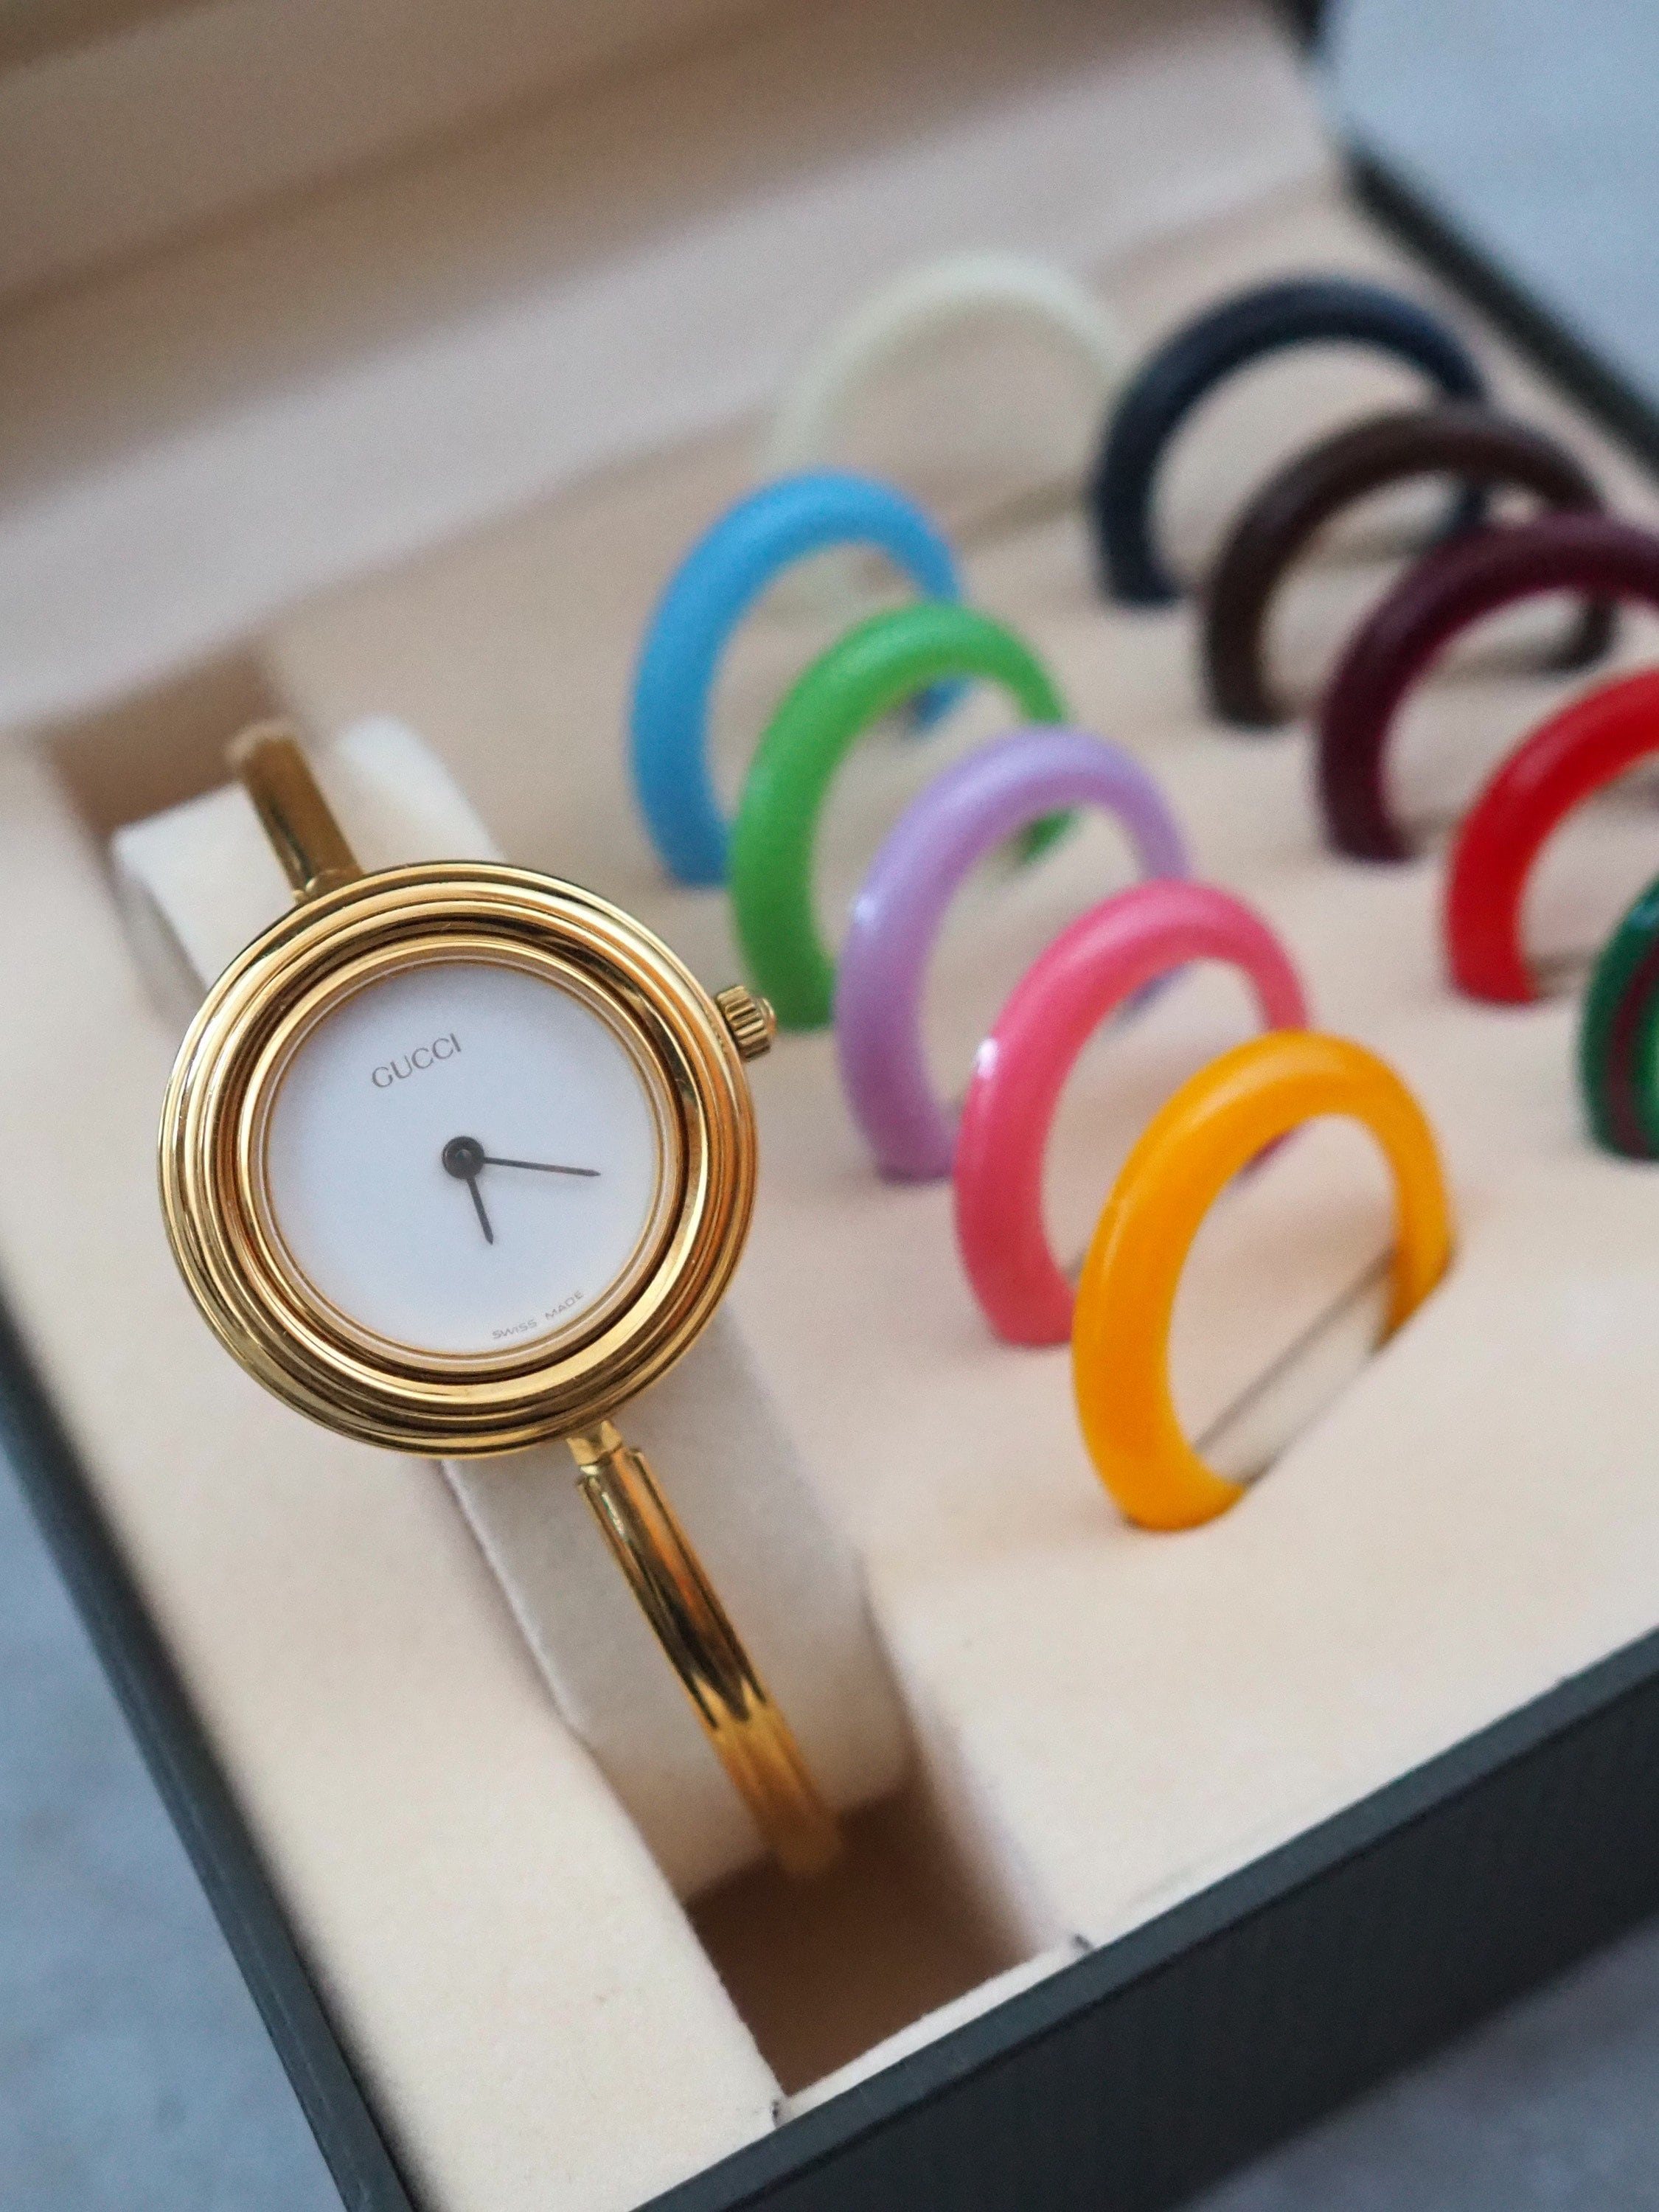 GUCCI Accessories Change Bezel 12 colors Bangle watch Wristwatch Gold